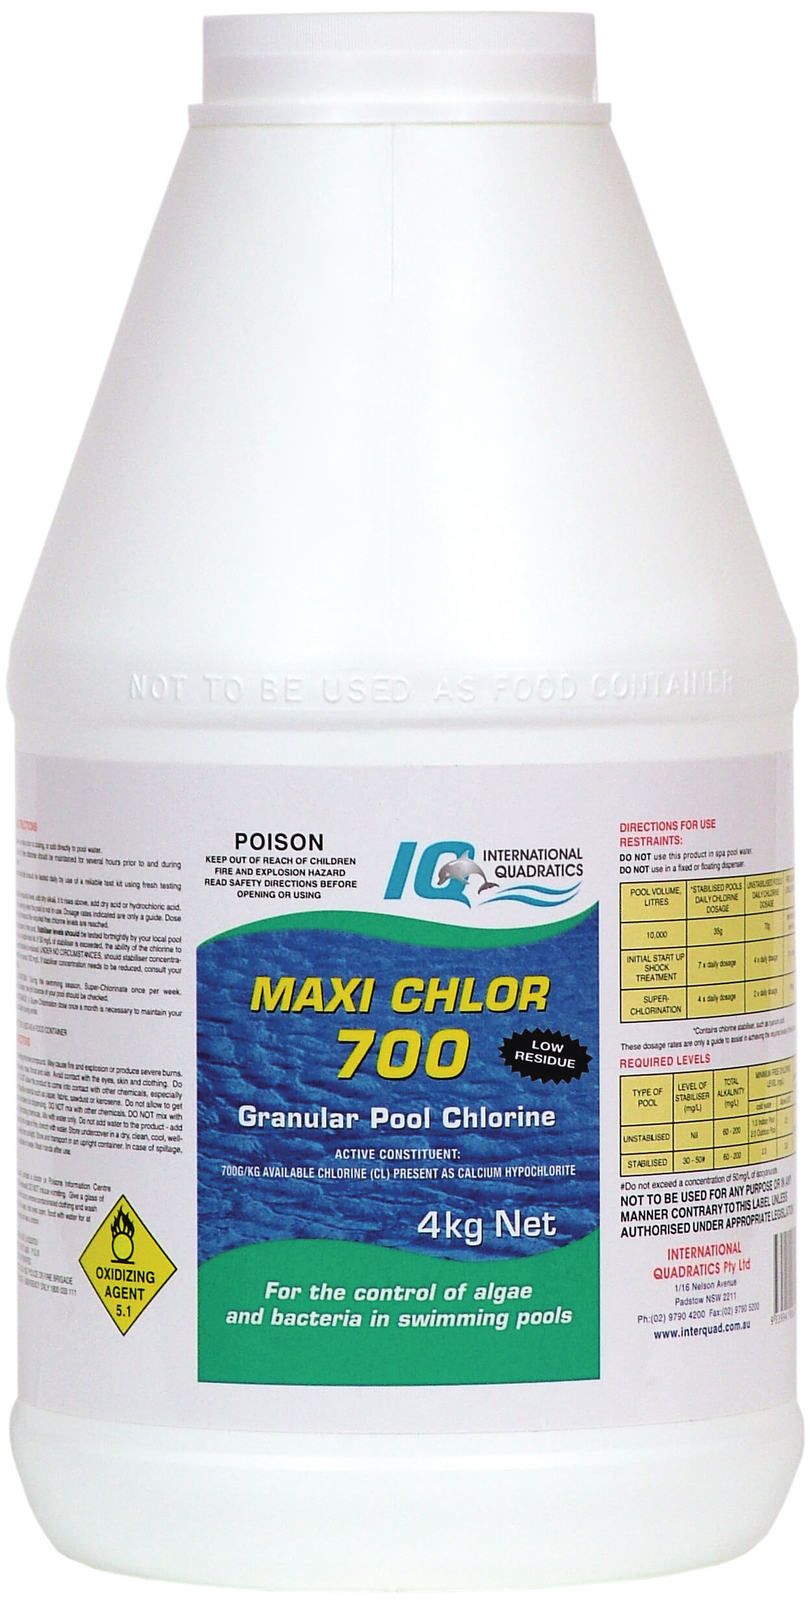 Maxi Chlor 700 Calcium Hypochlorite Non-Stabilised High Quality Granular Pool Chlorine 4 kg